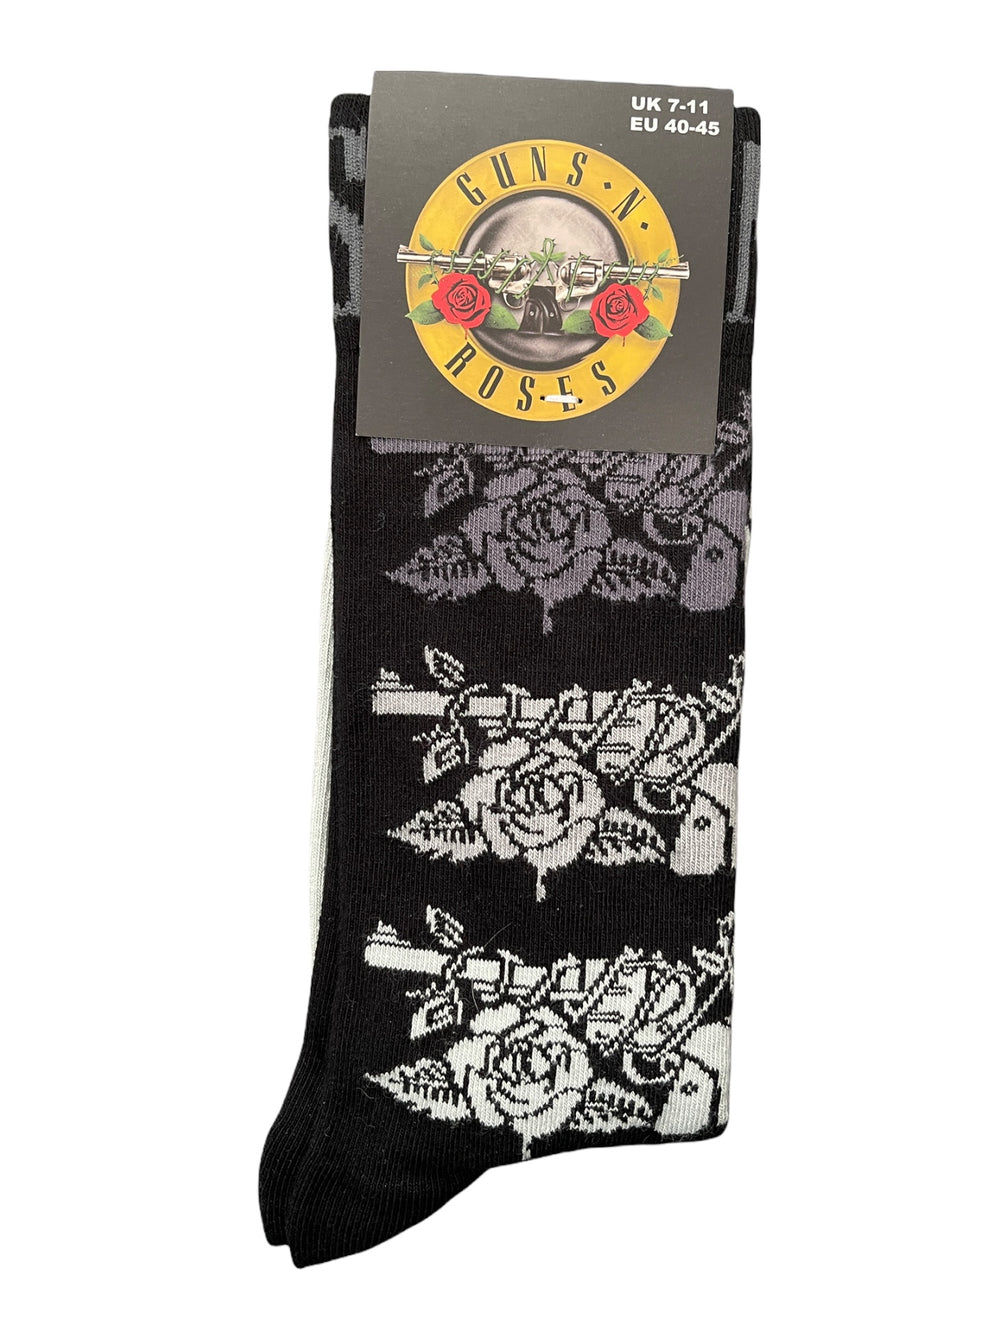 Guns N' Roses - PISTOLS MONO Official Product 1 Pair Jacquard Socks Brand New